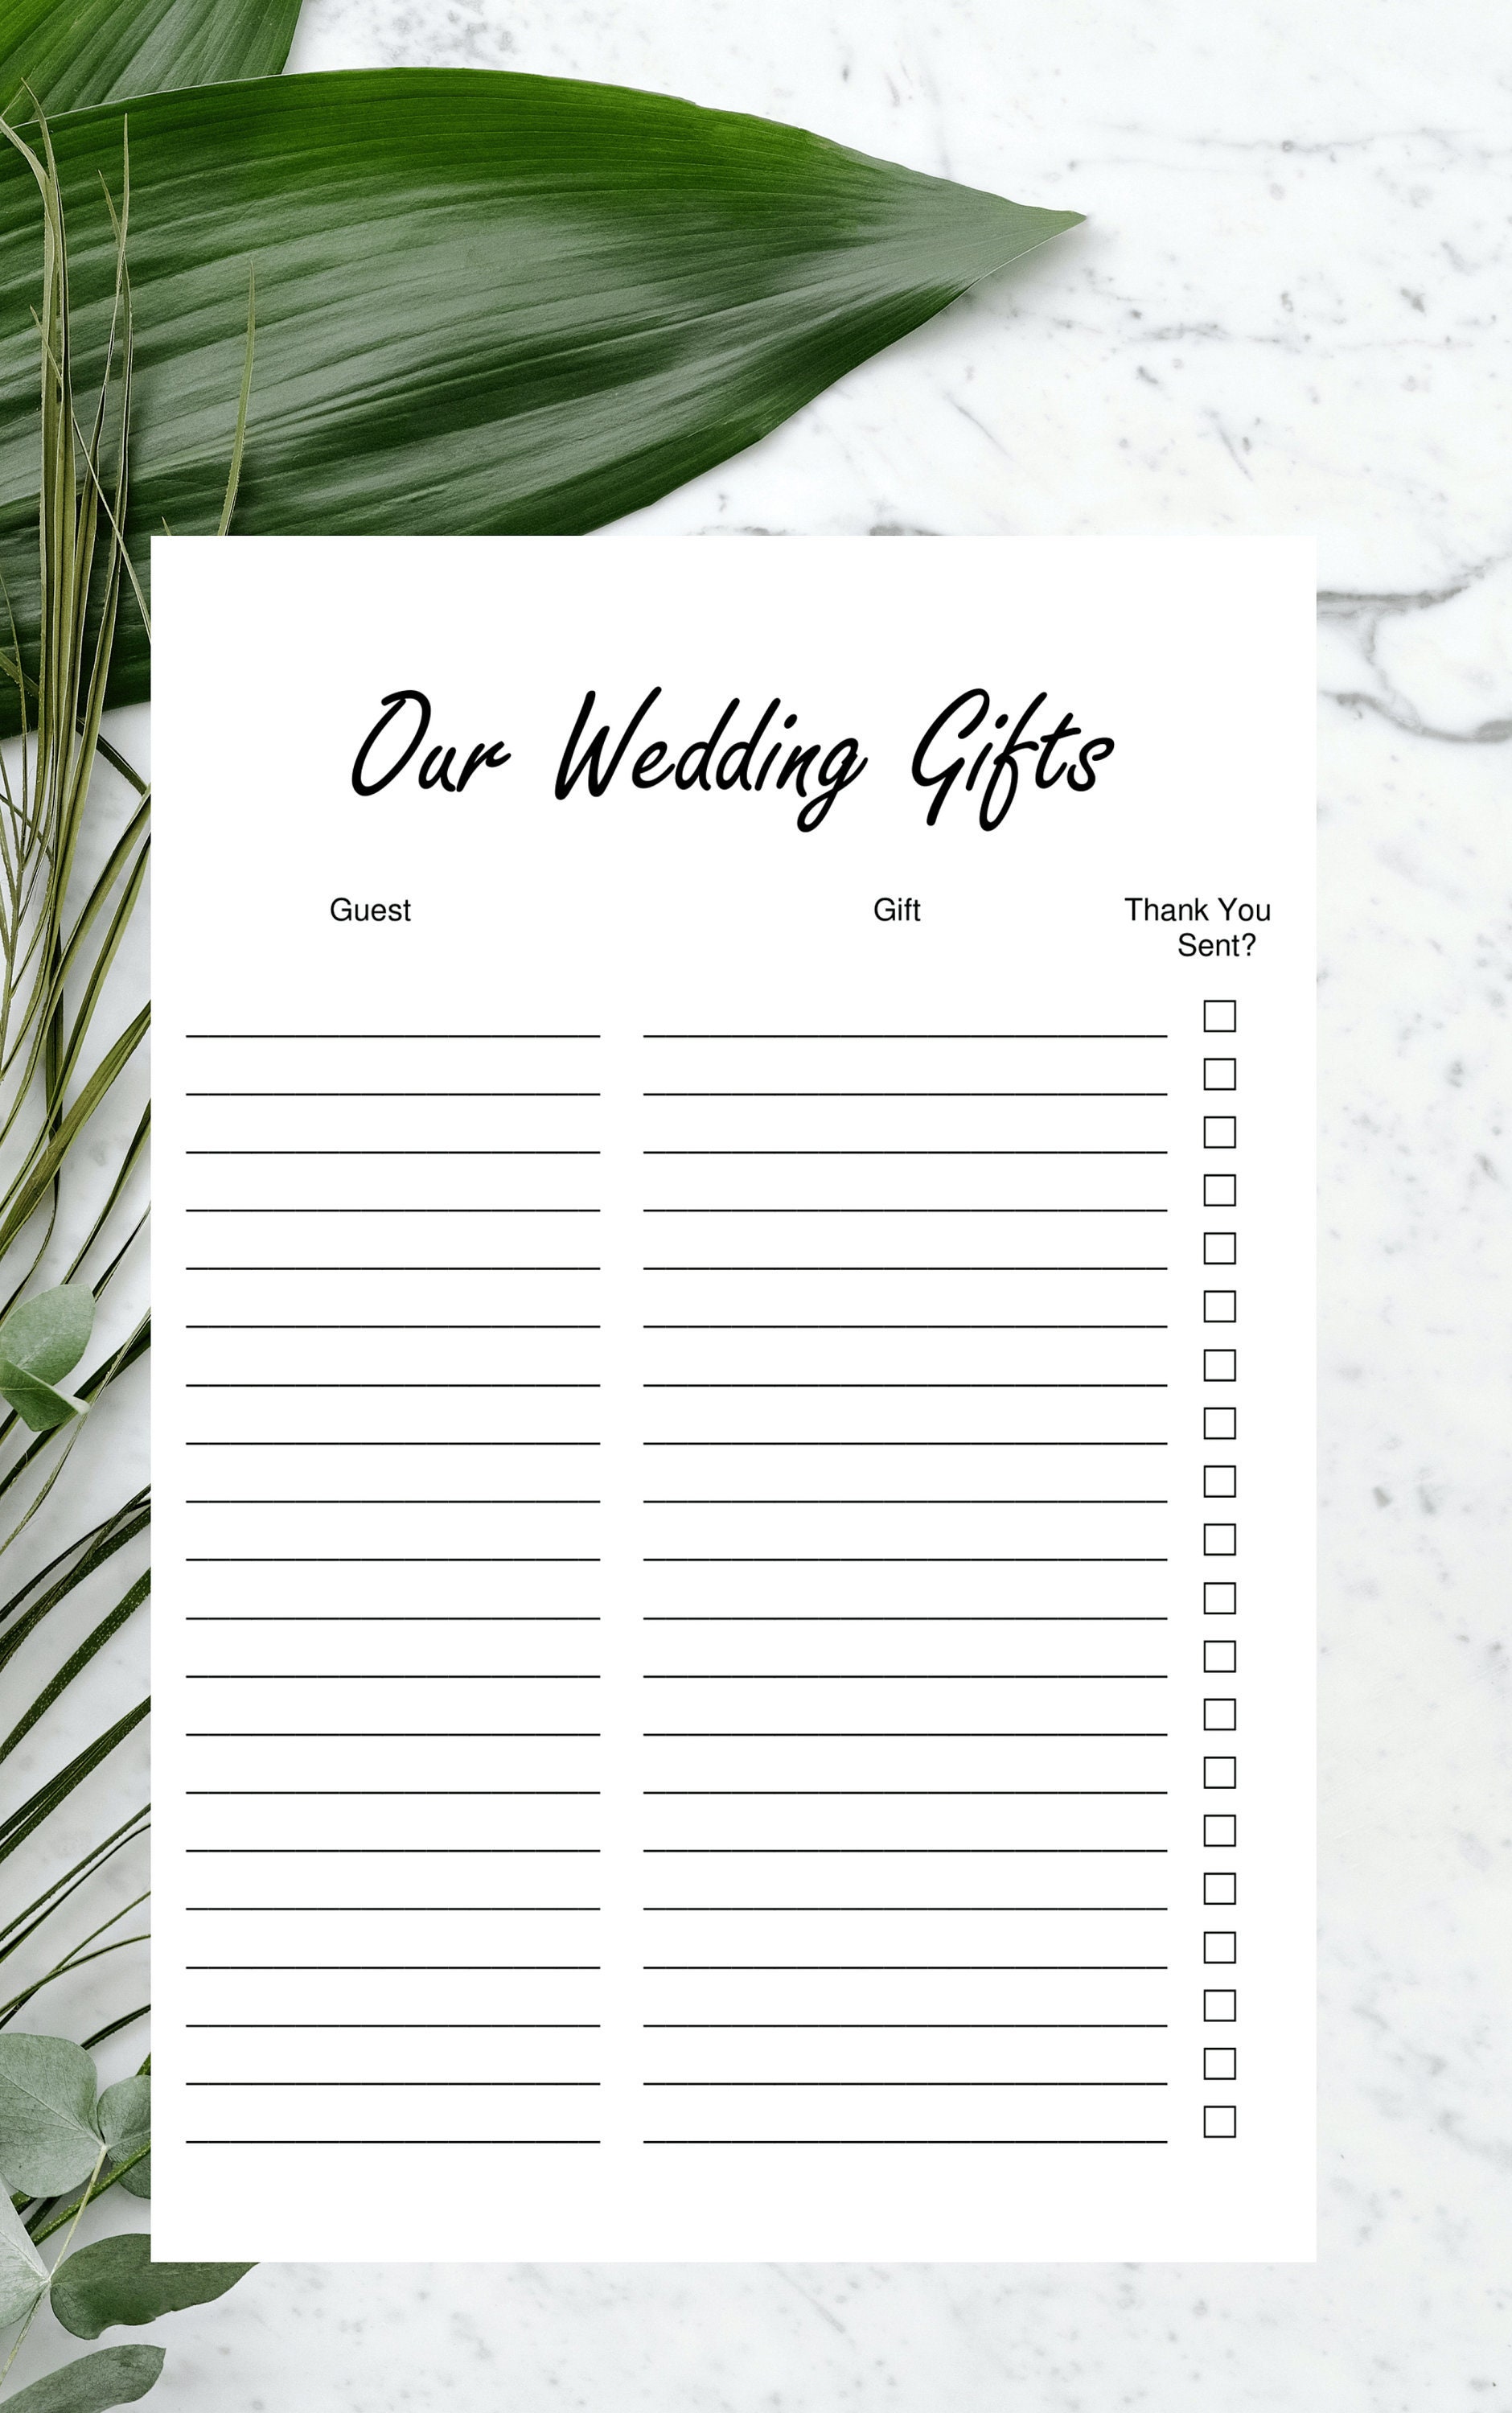 grab-your-wedding-planning-checklist-printable-gift-list-free-wedding-planning-checklist